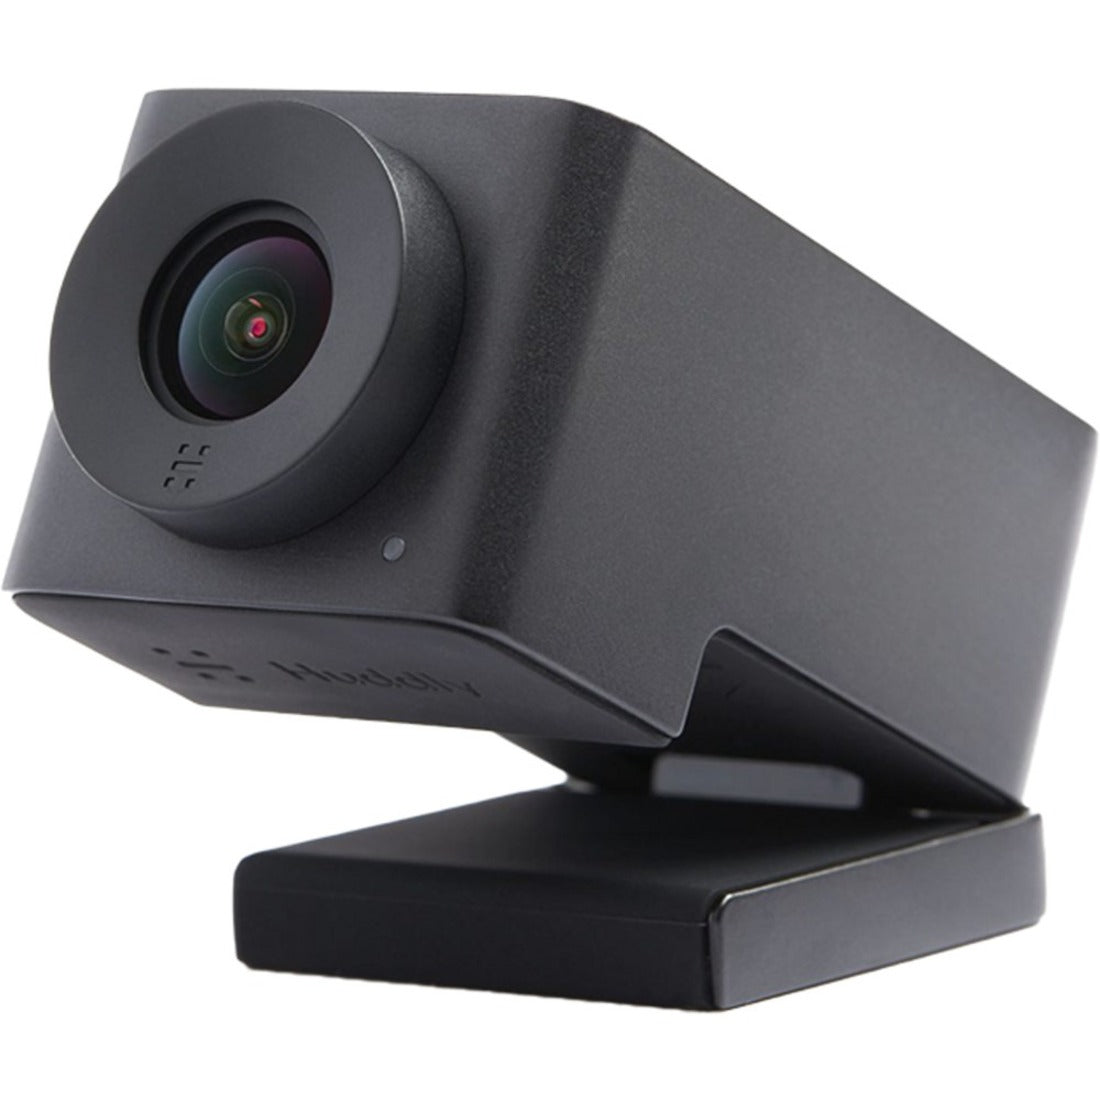 Crestron 6511339 Flex UC-MM30-T Video Conference Equipment, Full HD, CMOS Image Sensor